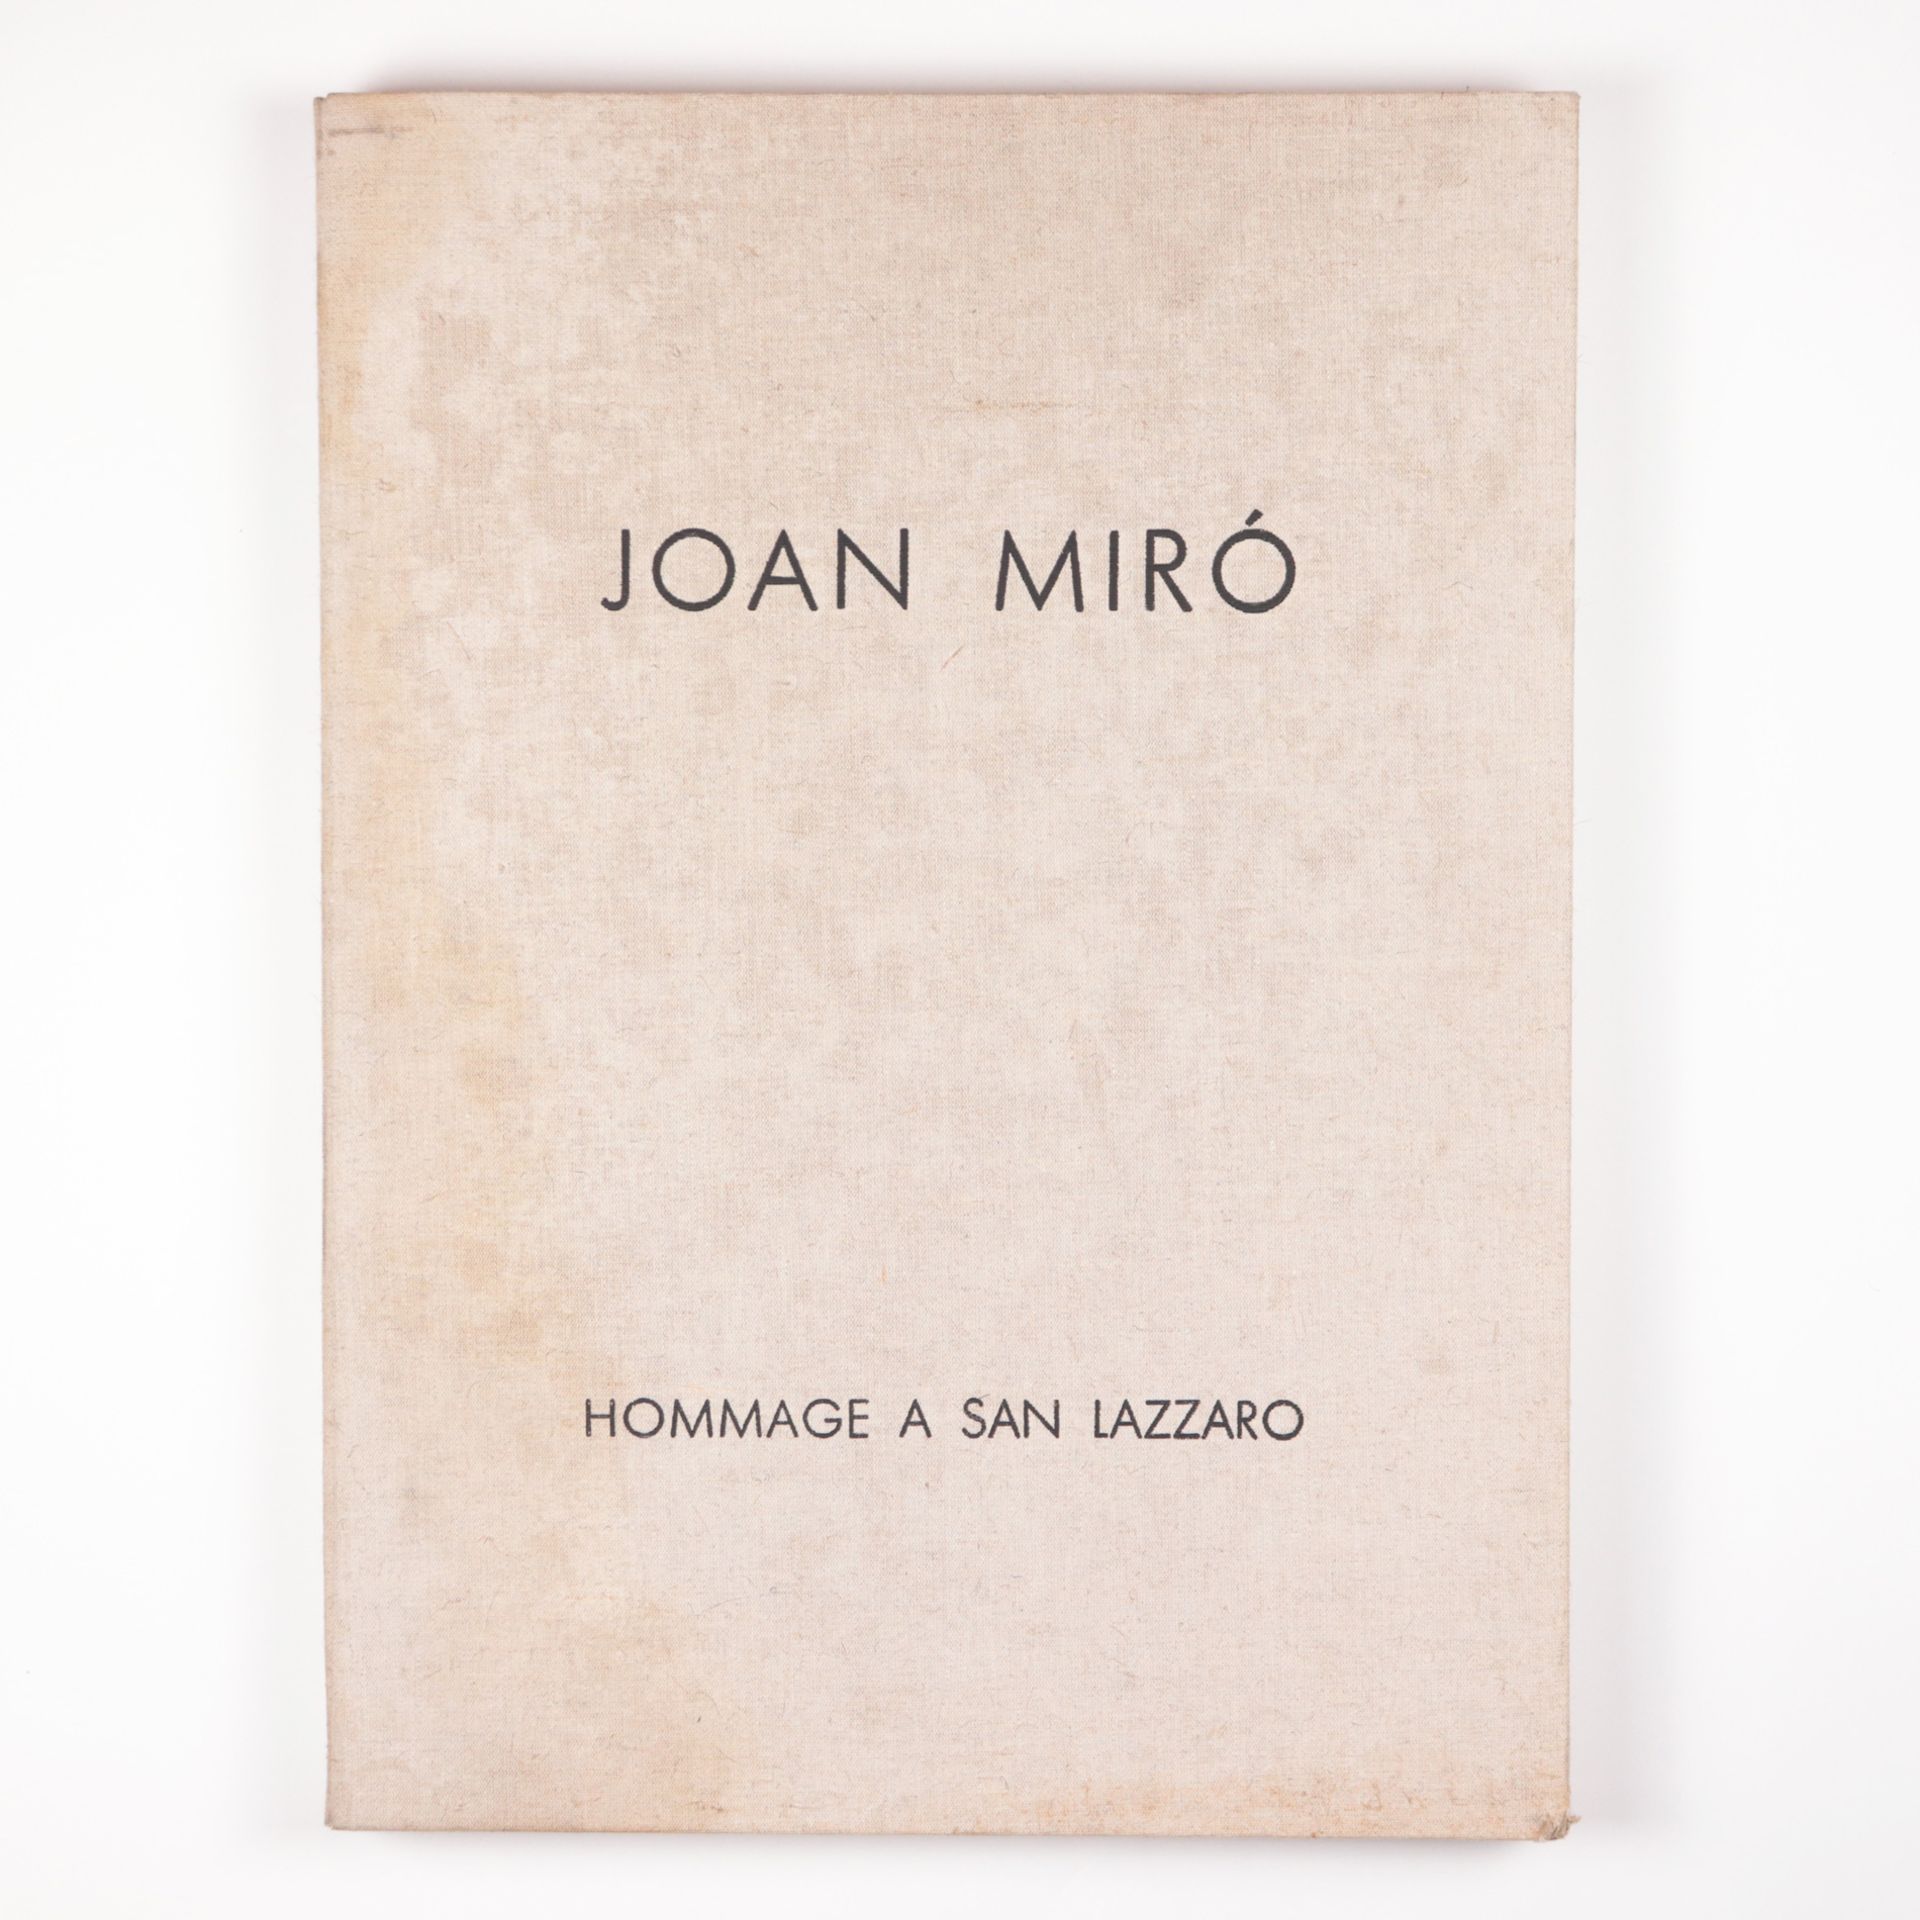 Miró, Joan - "Hommage a San Lazzaro"